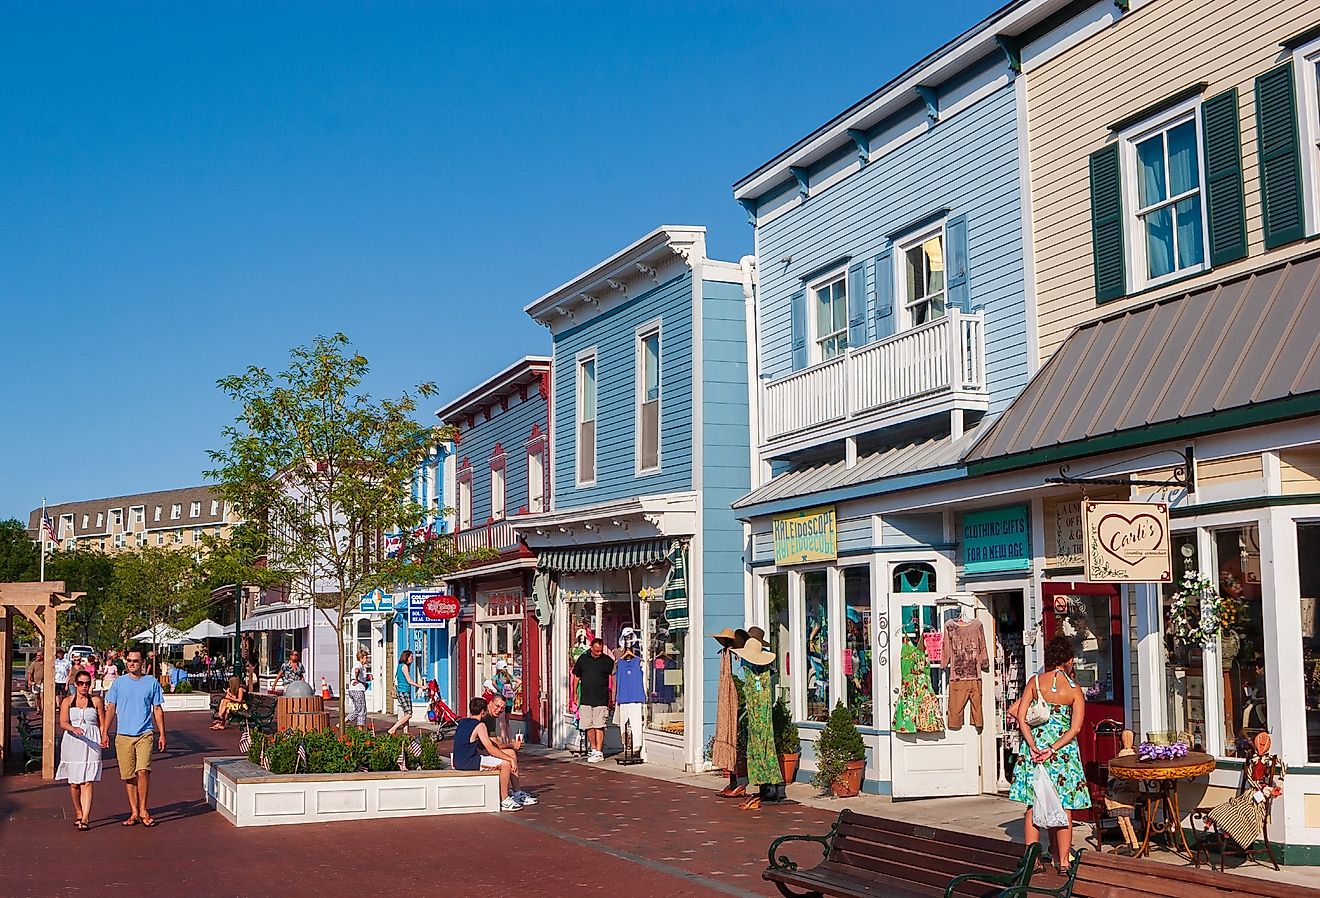 Tourists walk through Washington Street Mall in Cape May, New Jersey. Image credit JWCohen via Shutterstock